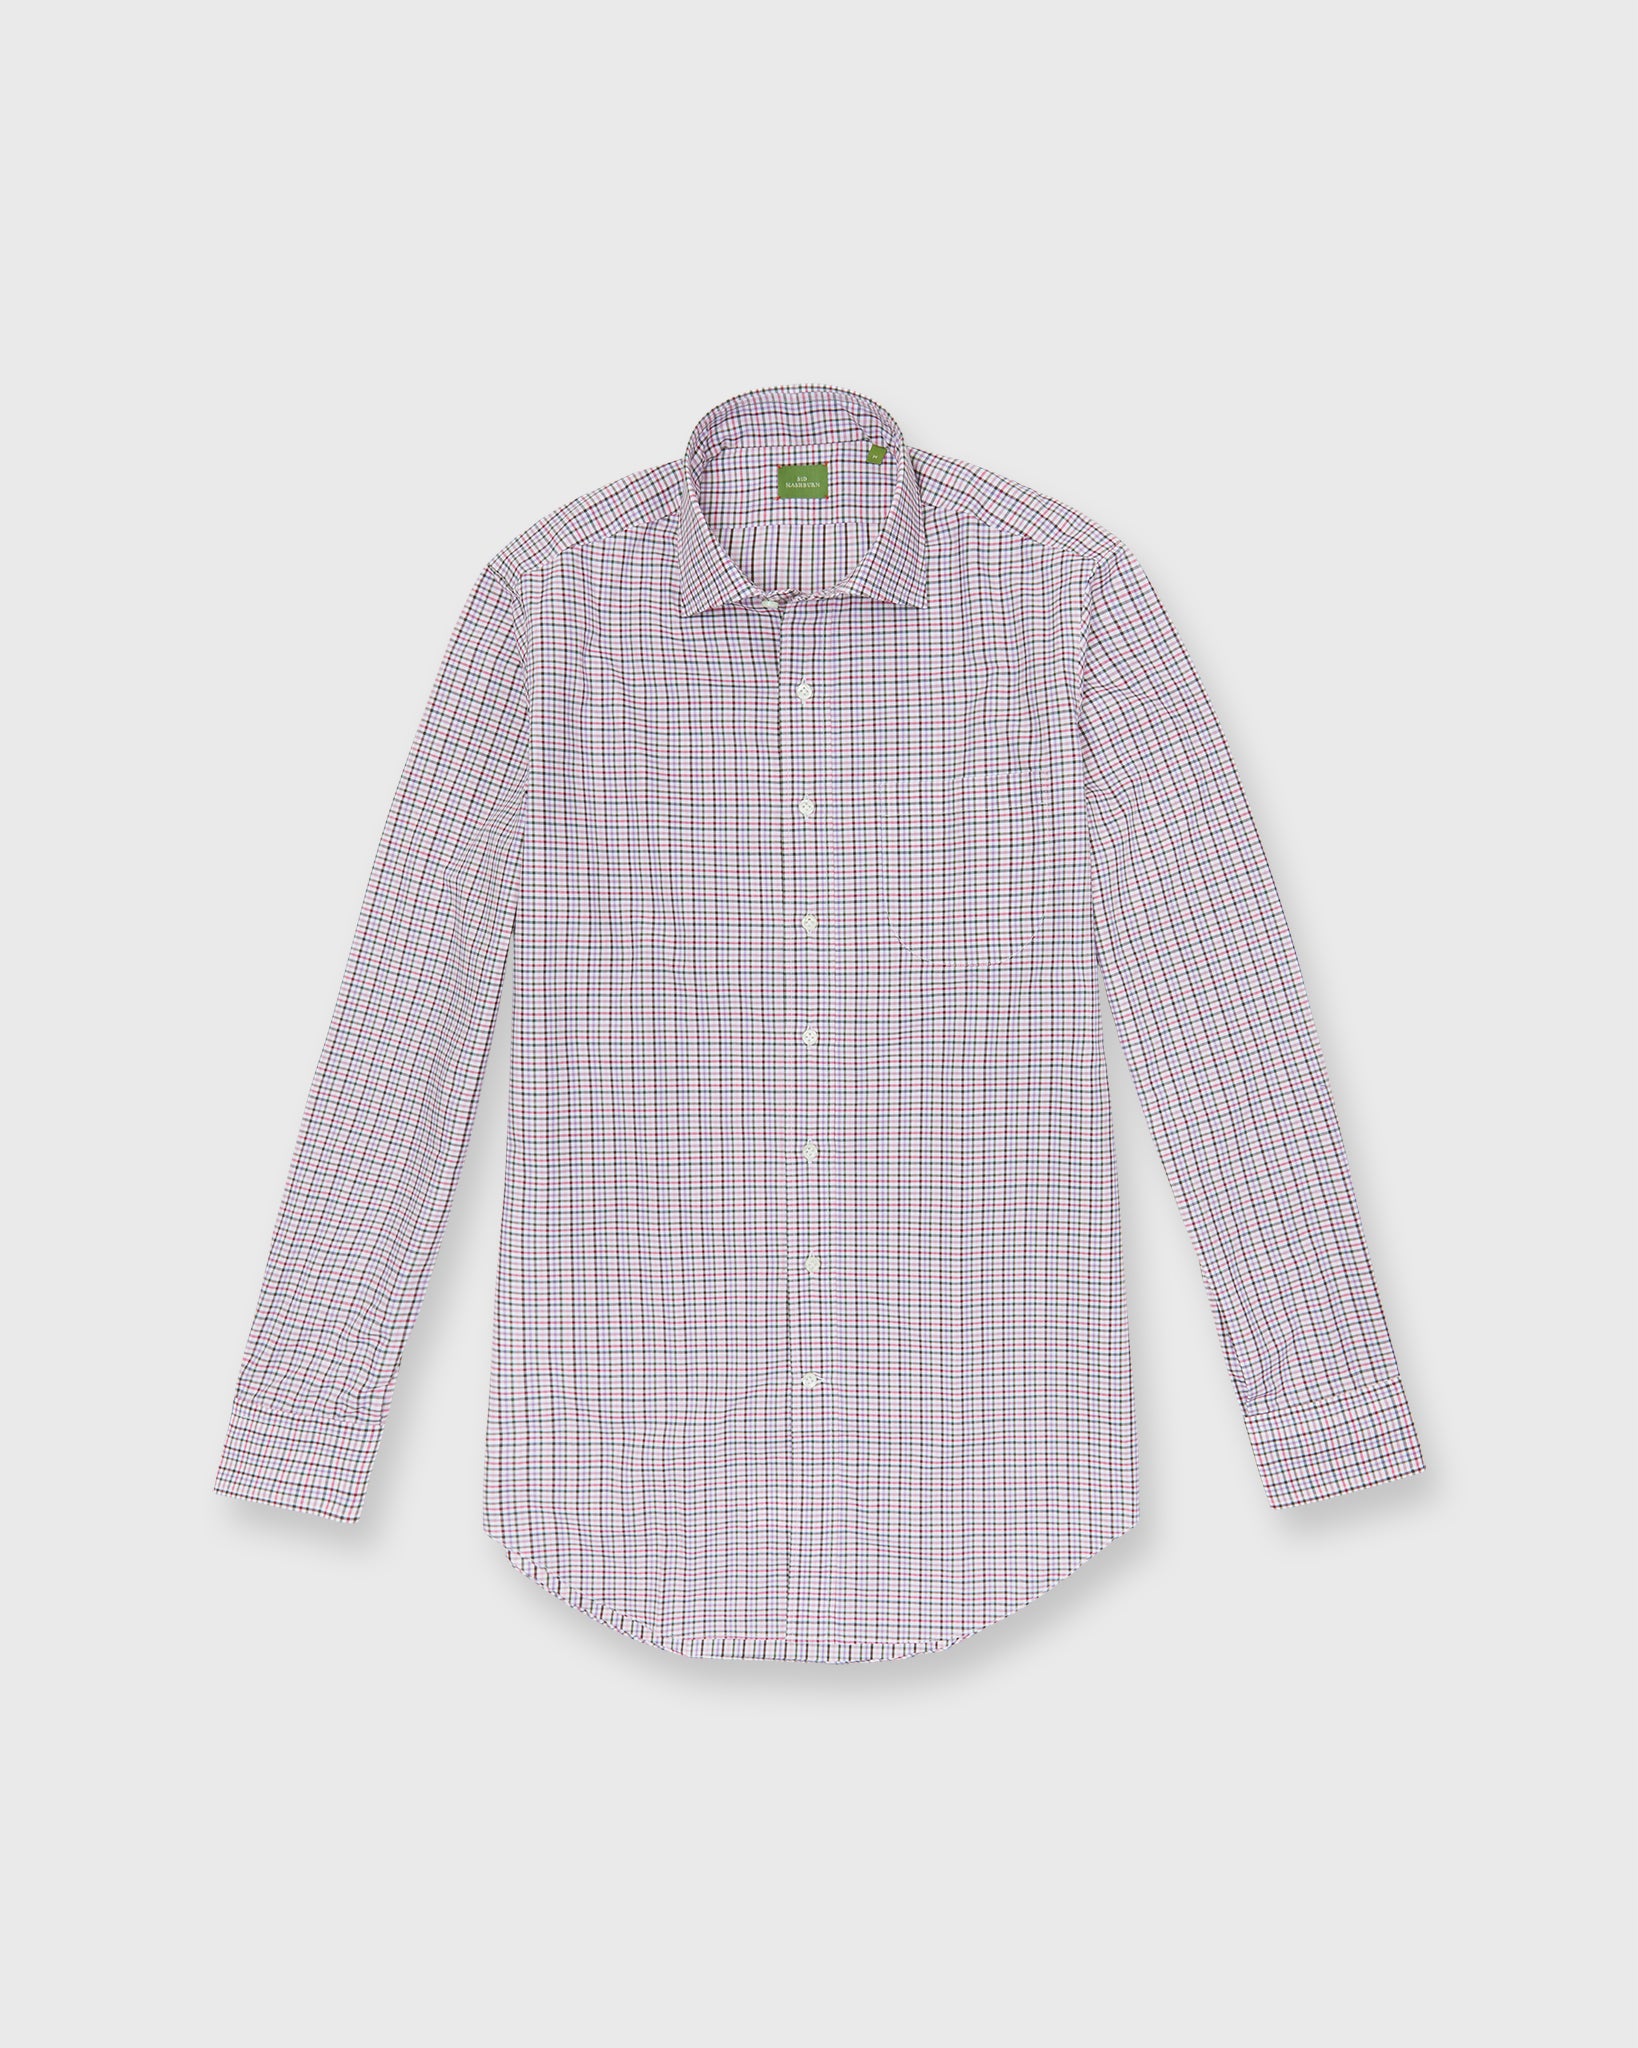 Otto Handmade Sport Shirt in Pink/Lavender/Olive Tattersall Twill